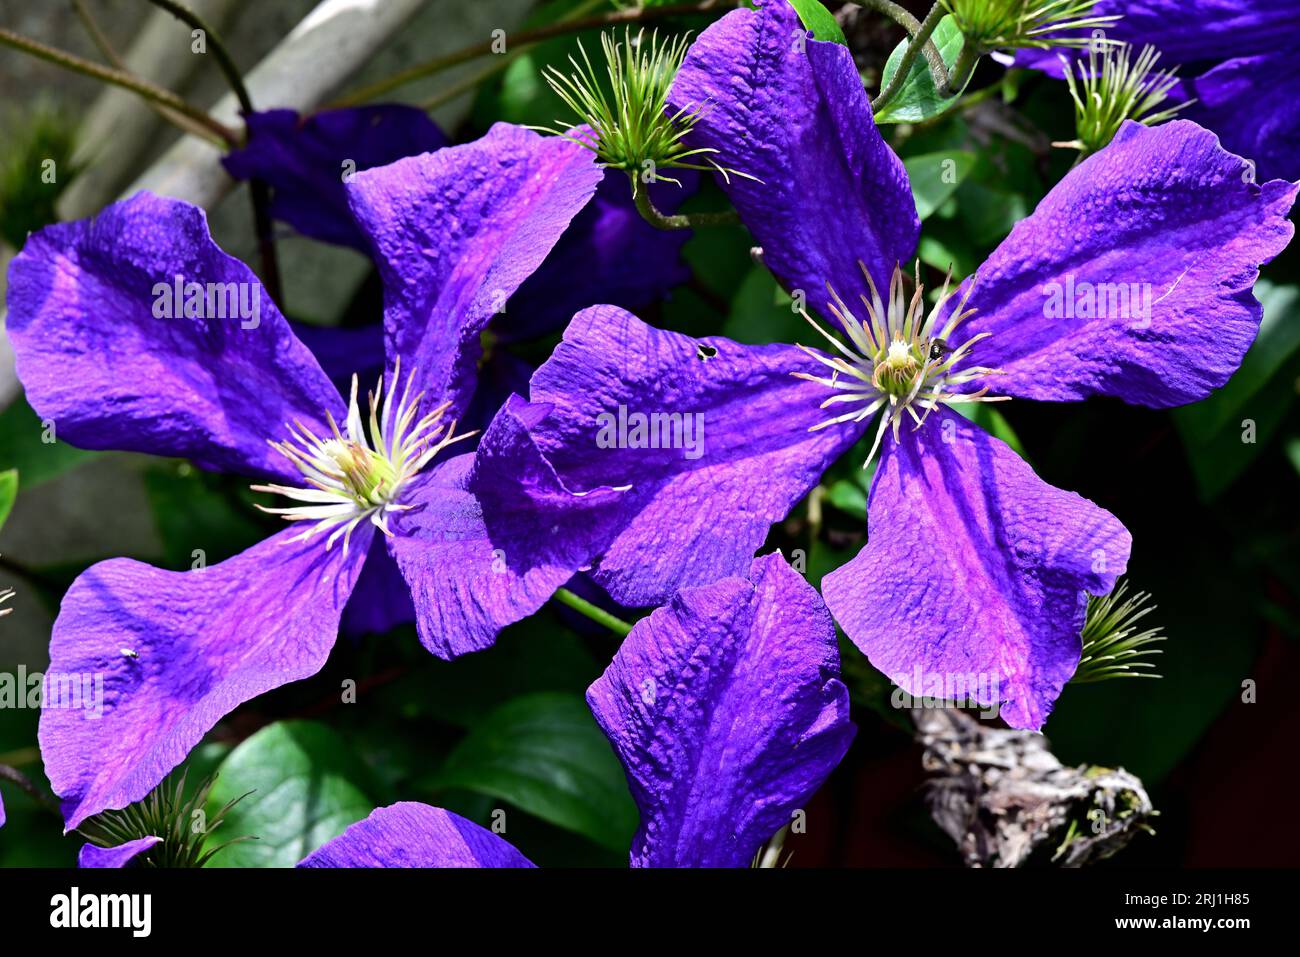 Around the UK - Close up of Clematis 'Jackmanii' flowers Stock Photo